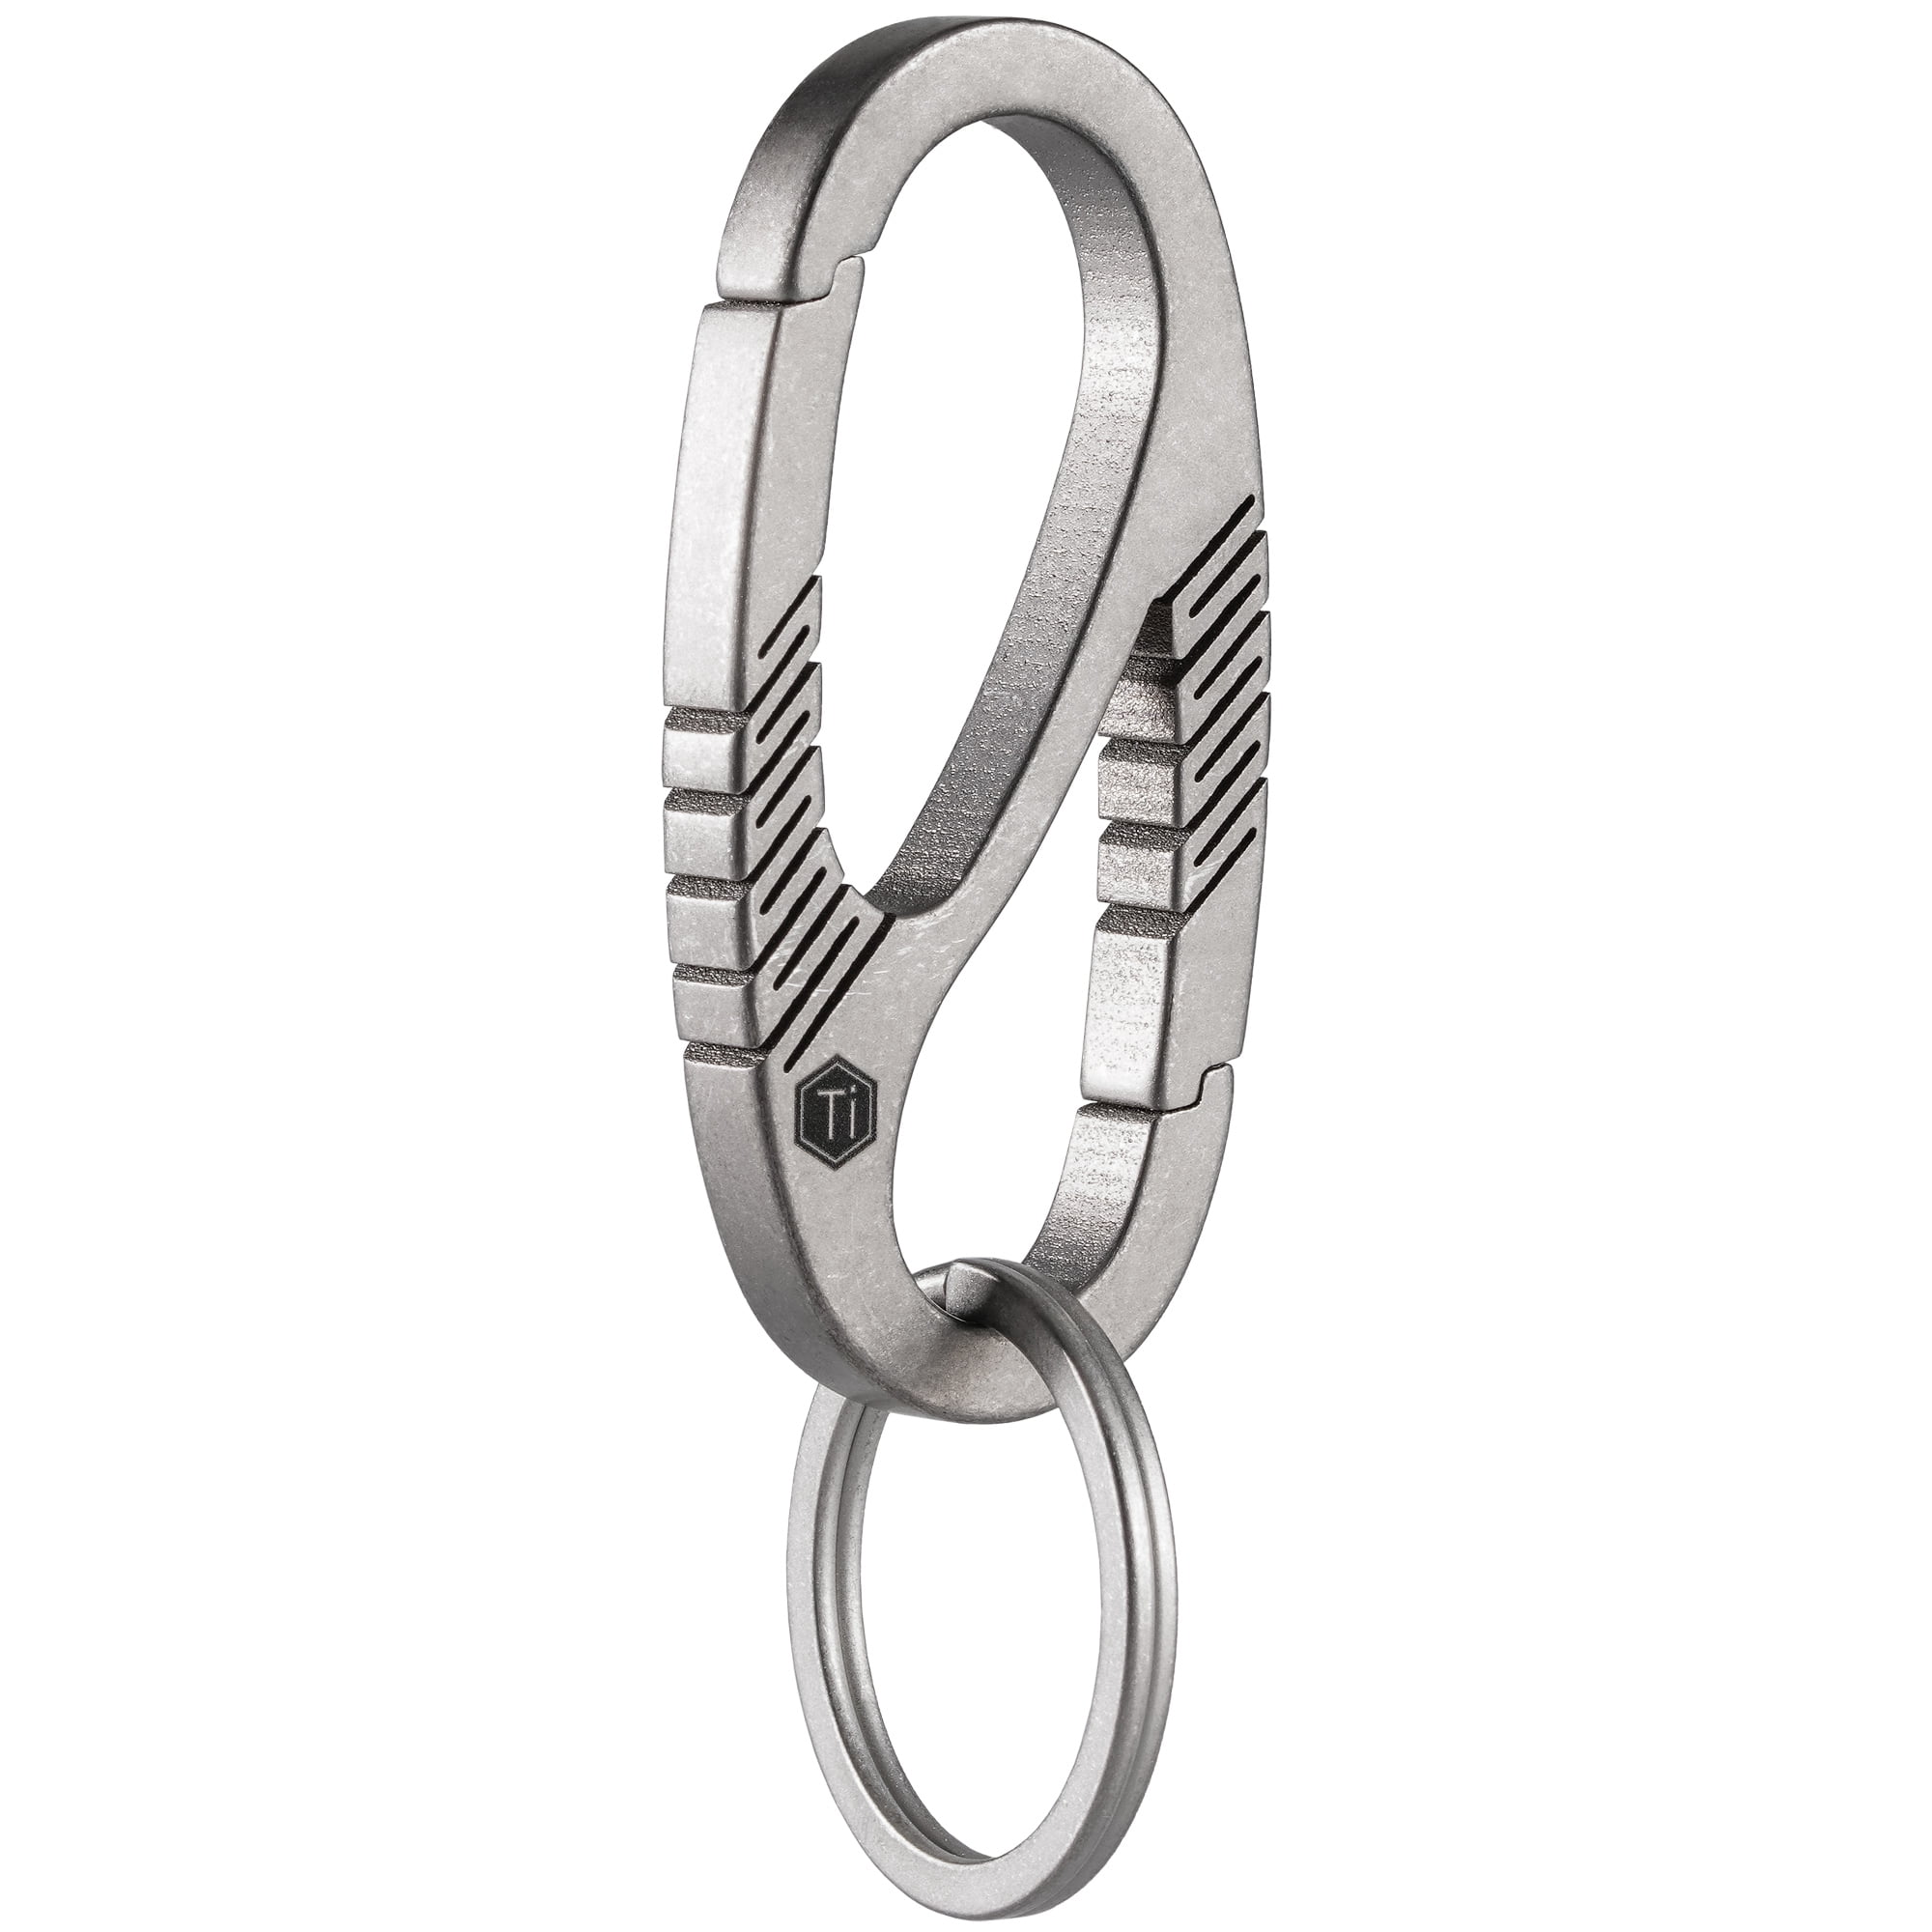 TISUR Titanium Key Ring, Key Chain Rings Heavy Duty Swivel Keyrings Carabiner Keychain for Men and Women Key Chain Assecories